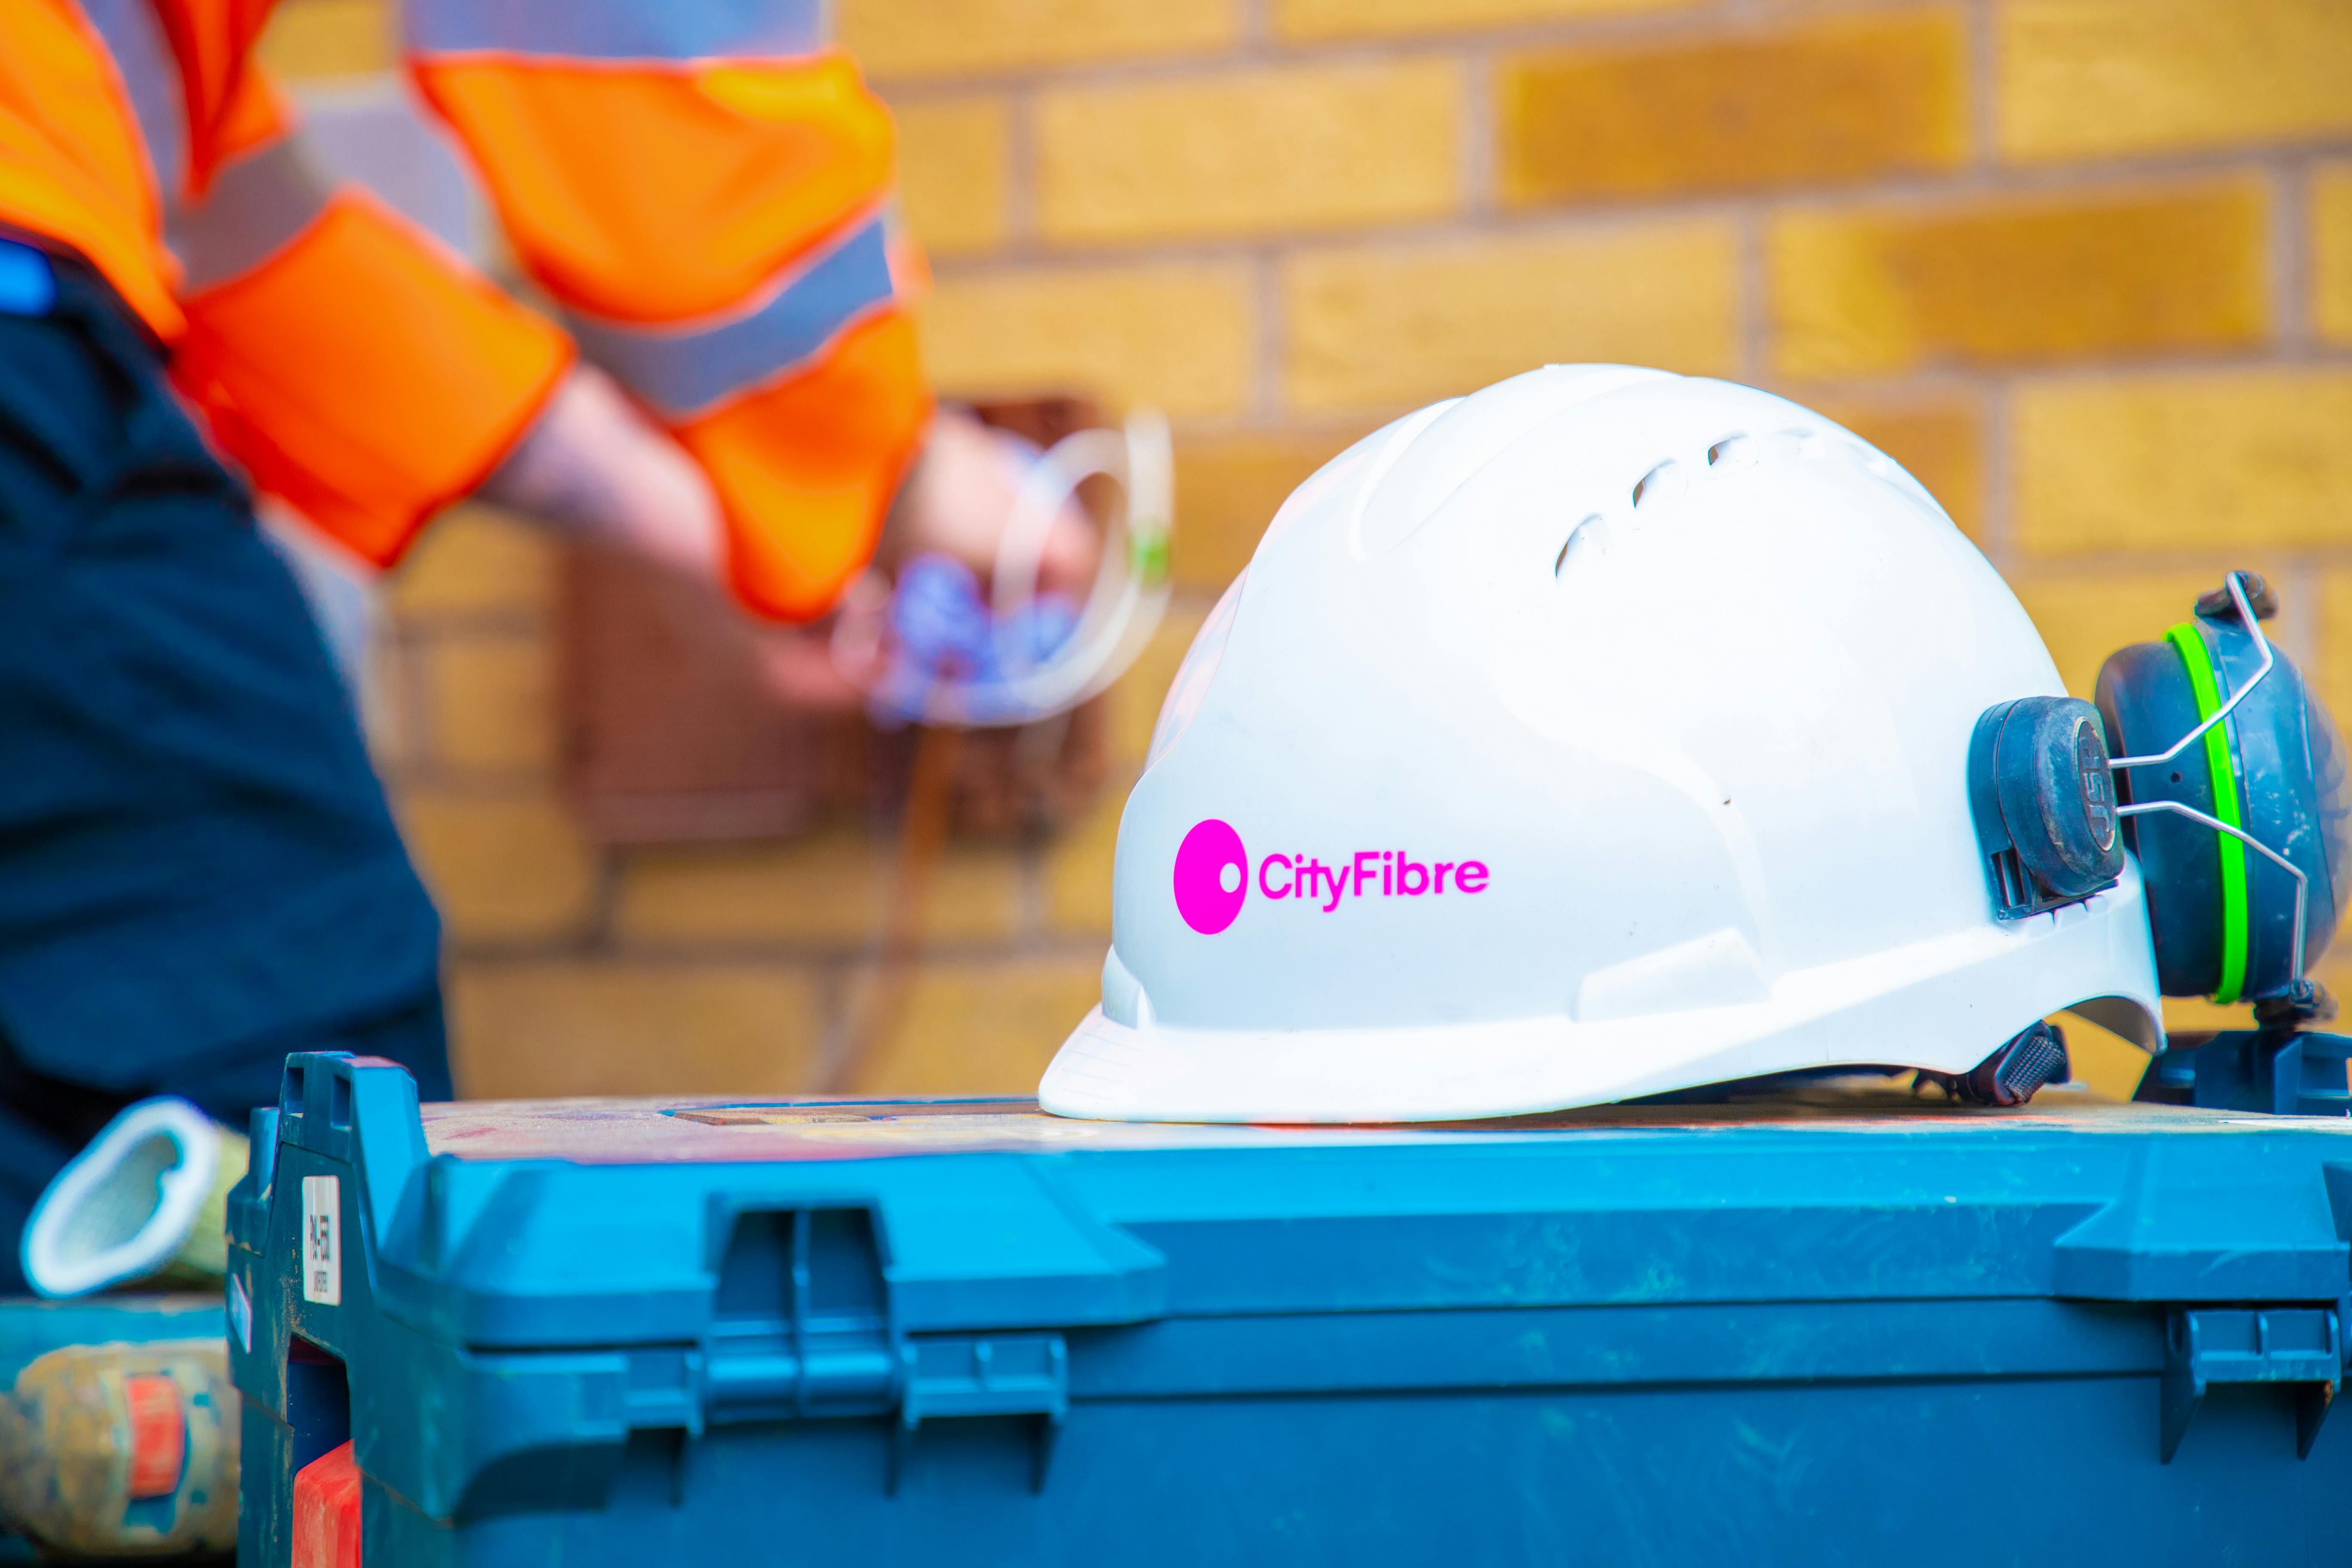 White Fibre optic engineer's helmet with CityFibre logo in pink